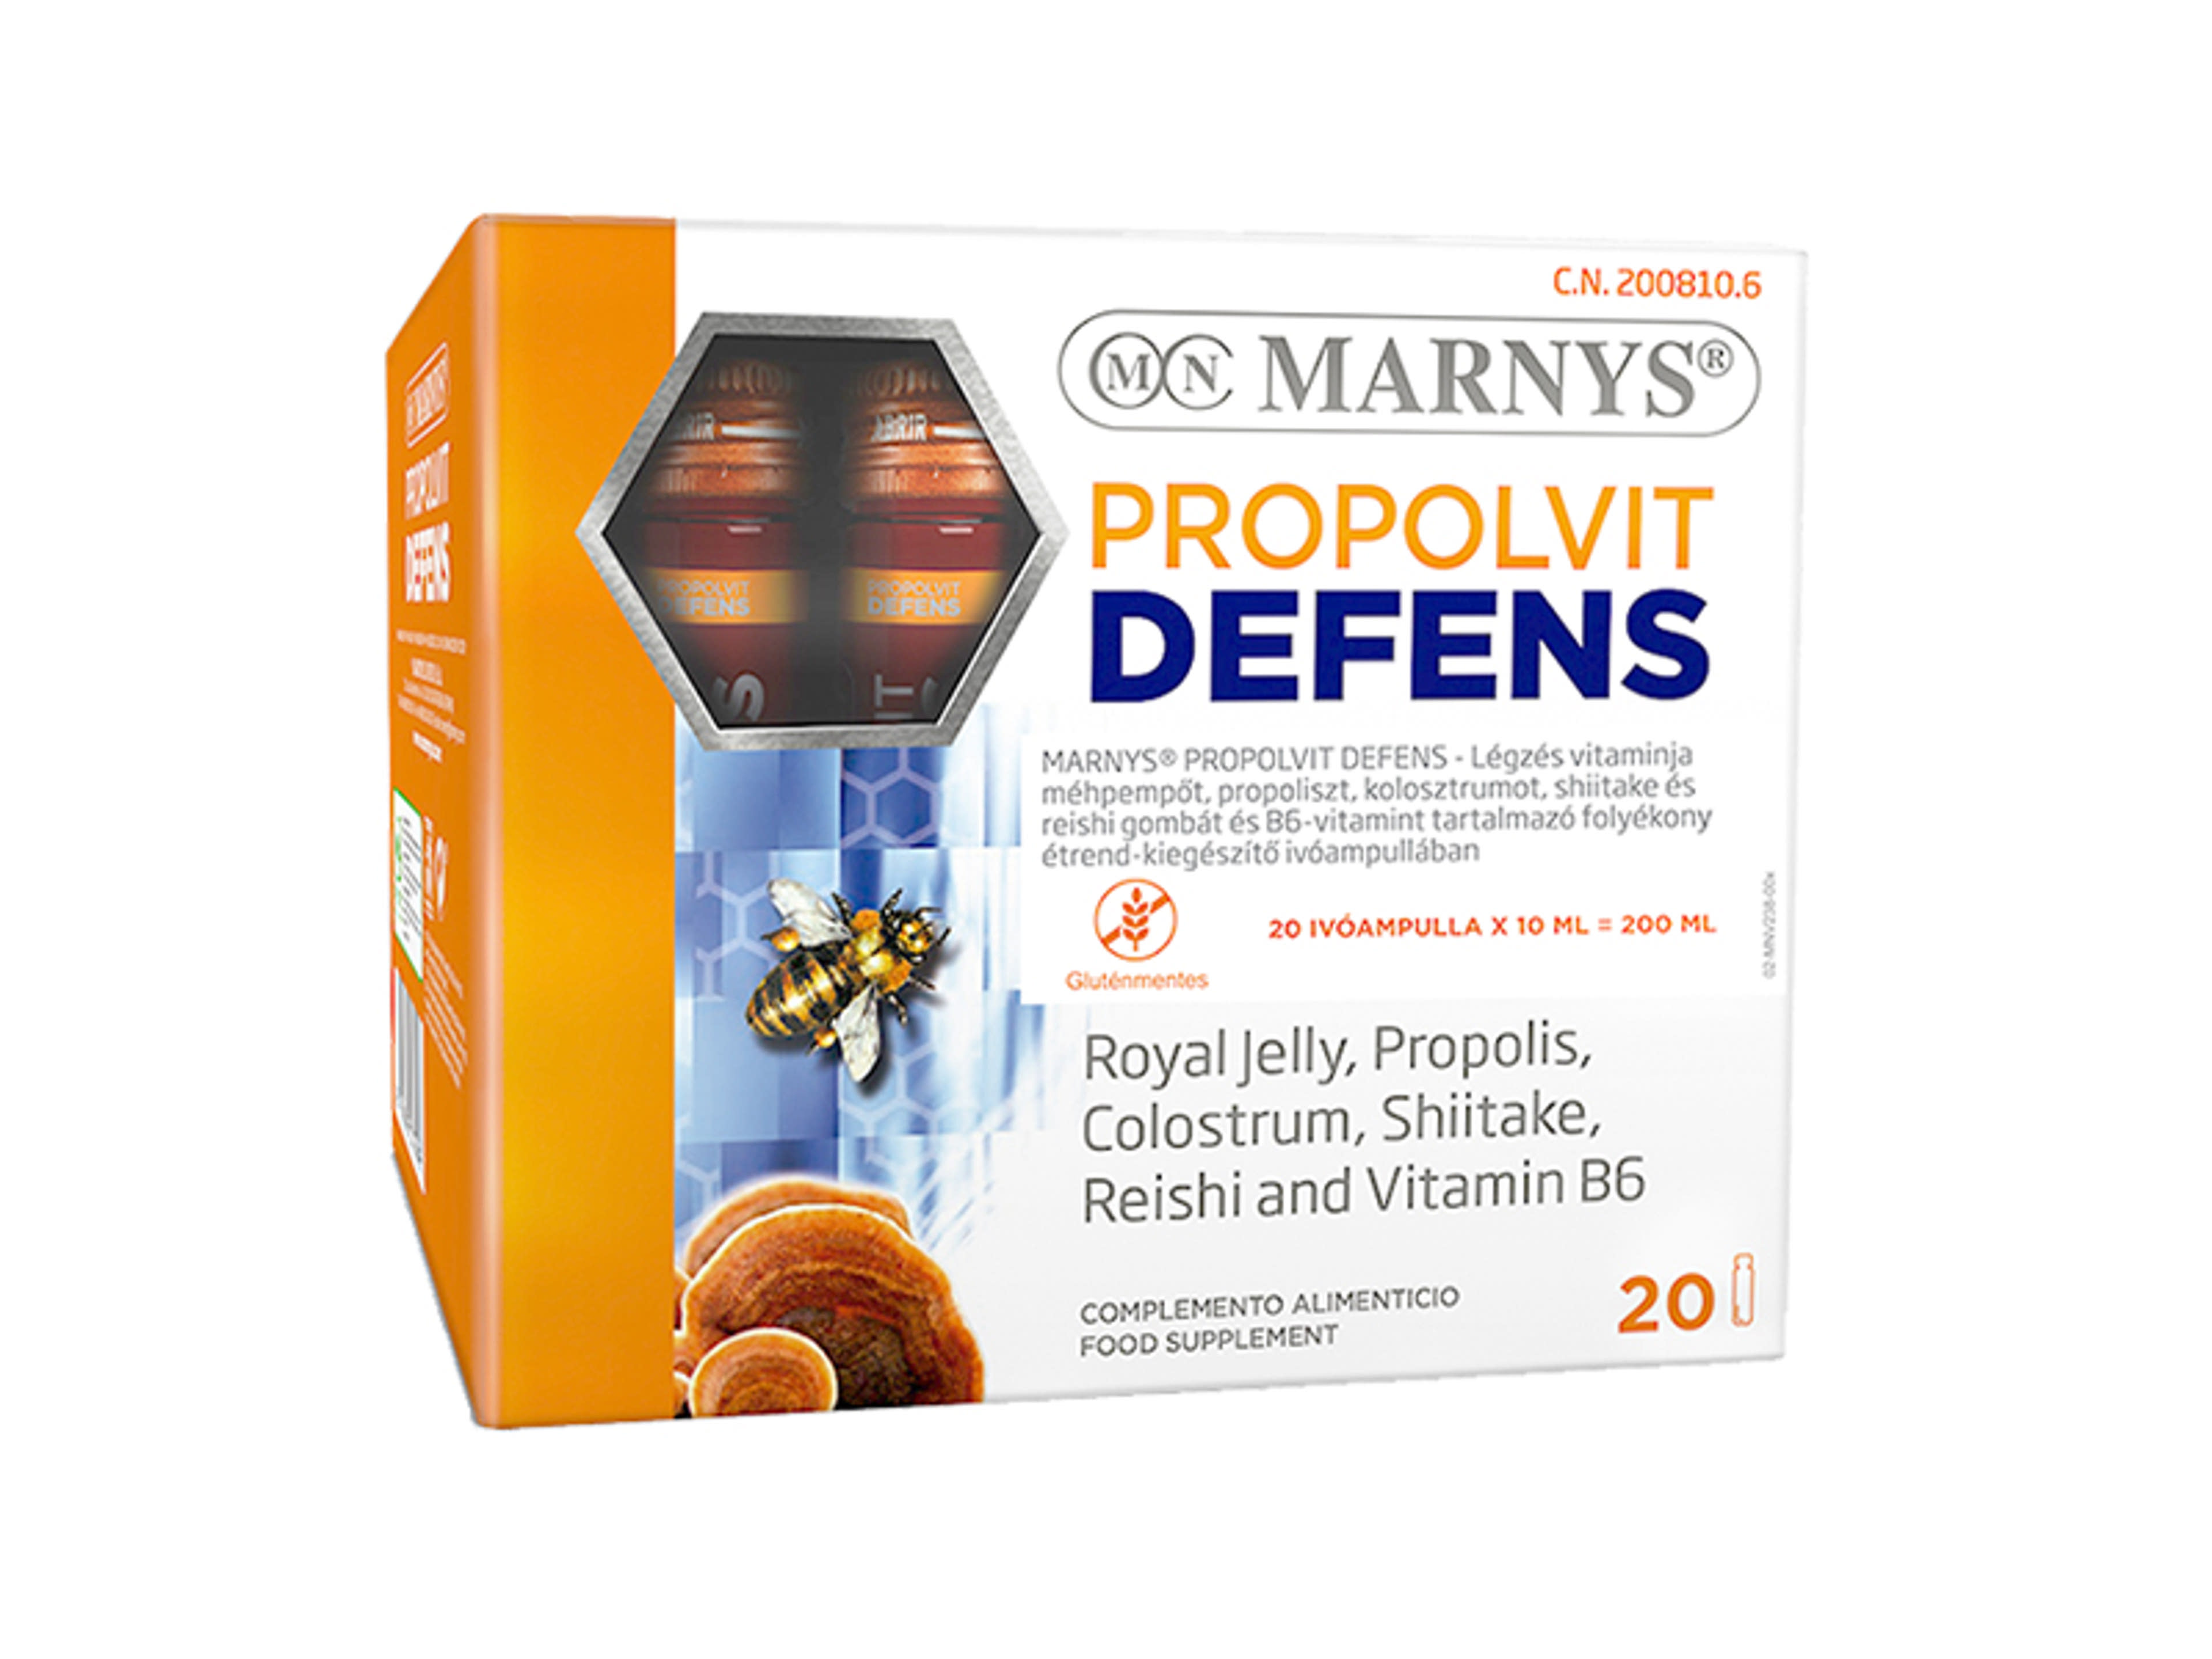 Marnys Propolvit Defens ivóampulla - 200 ml-1